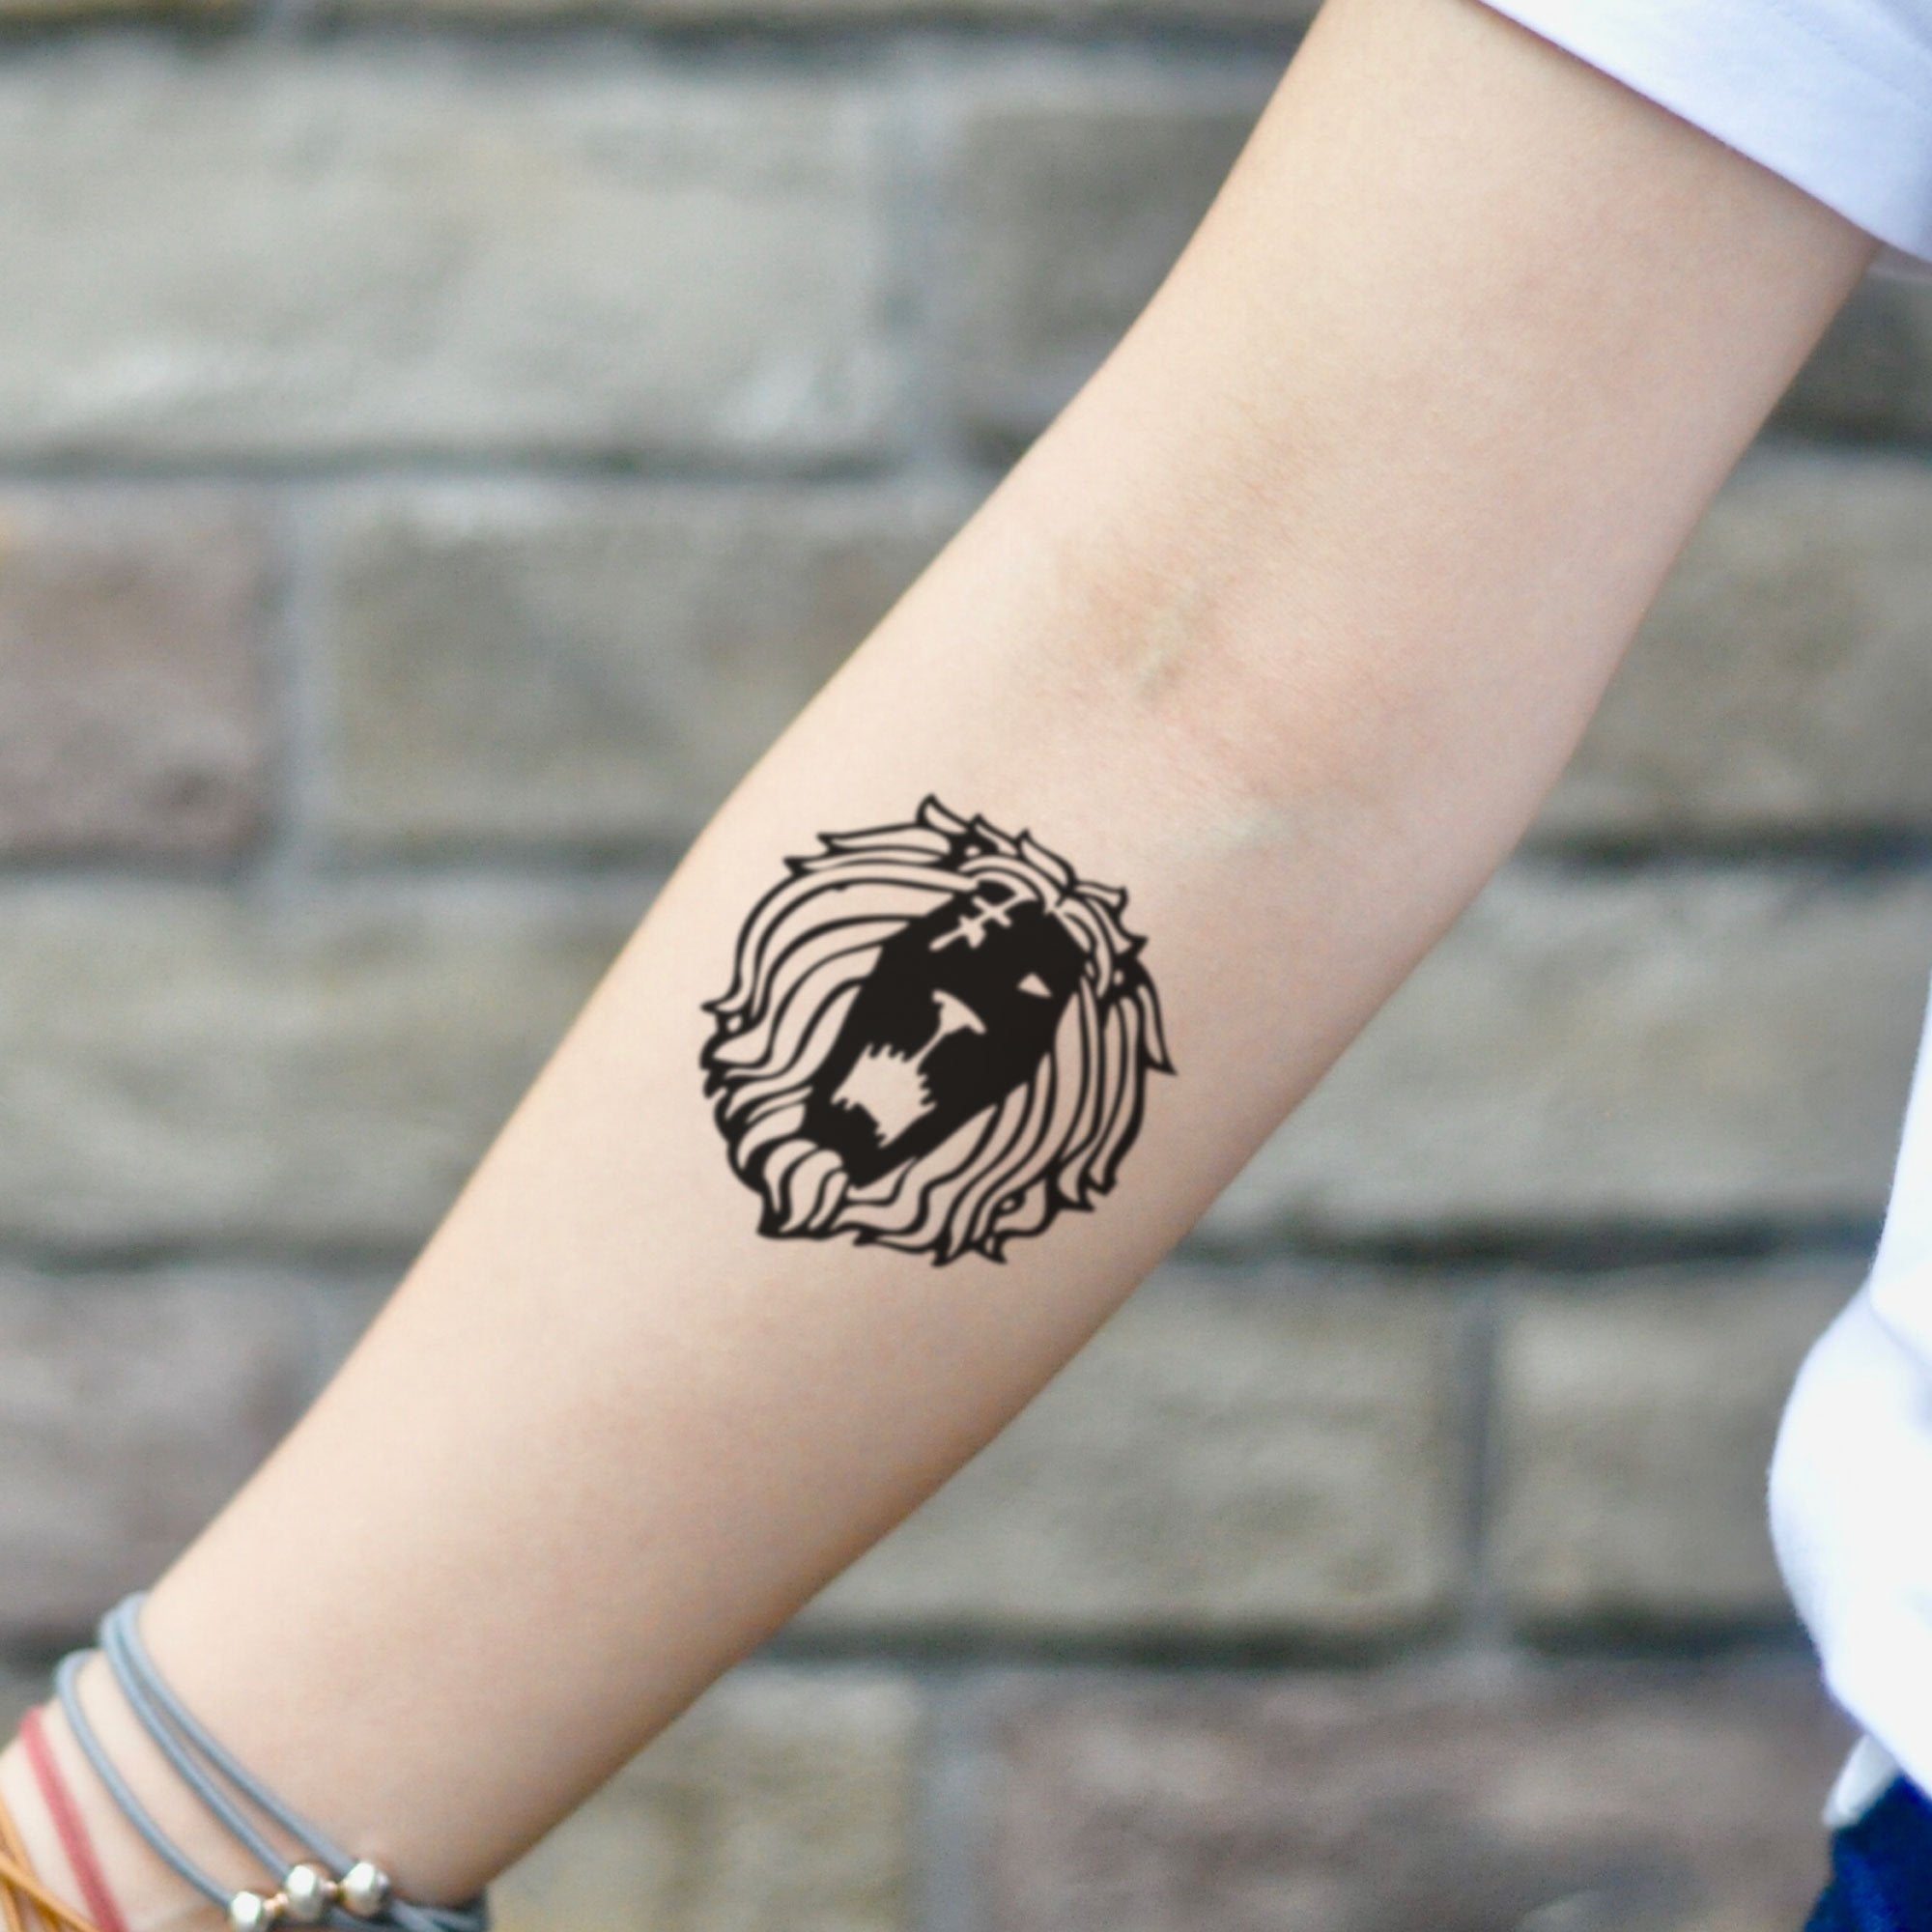 Baby Lion Temporary Tattoo Sticker - OhMyTat